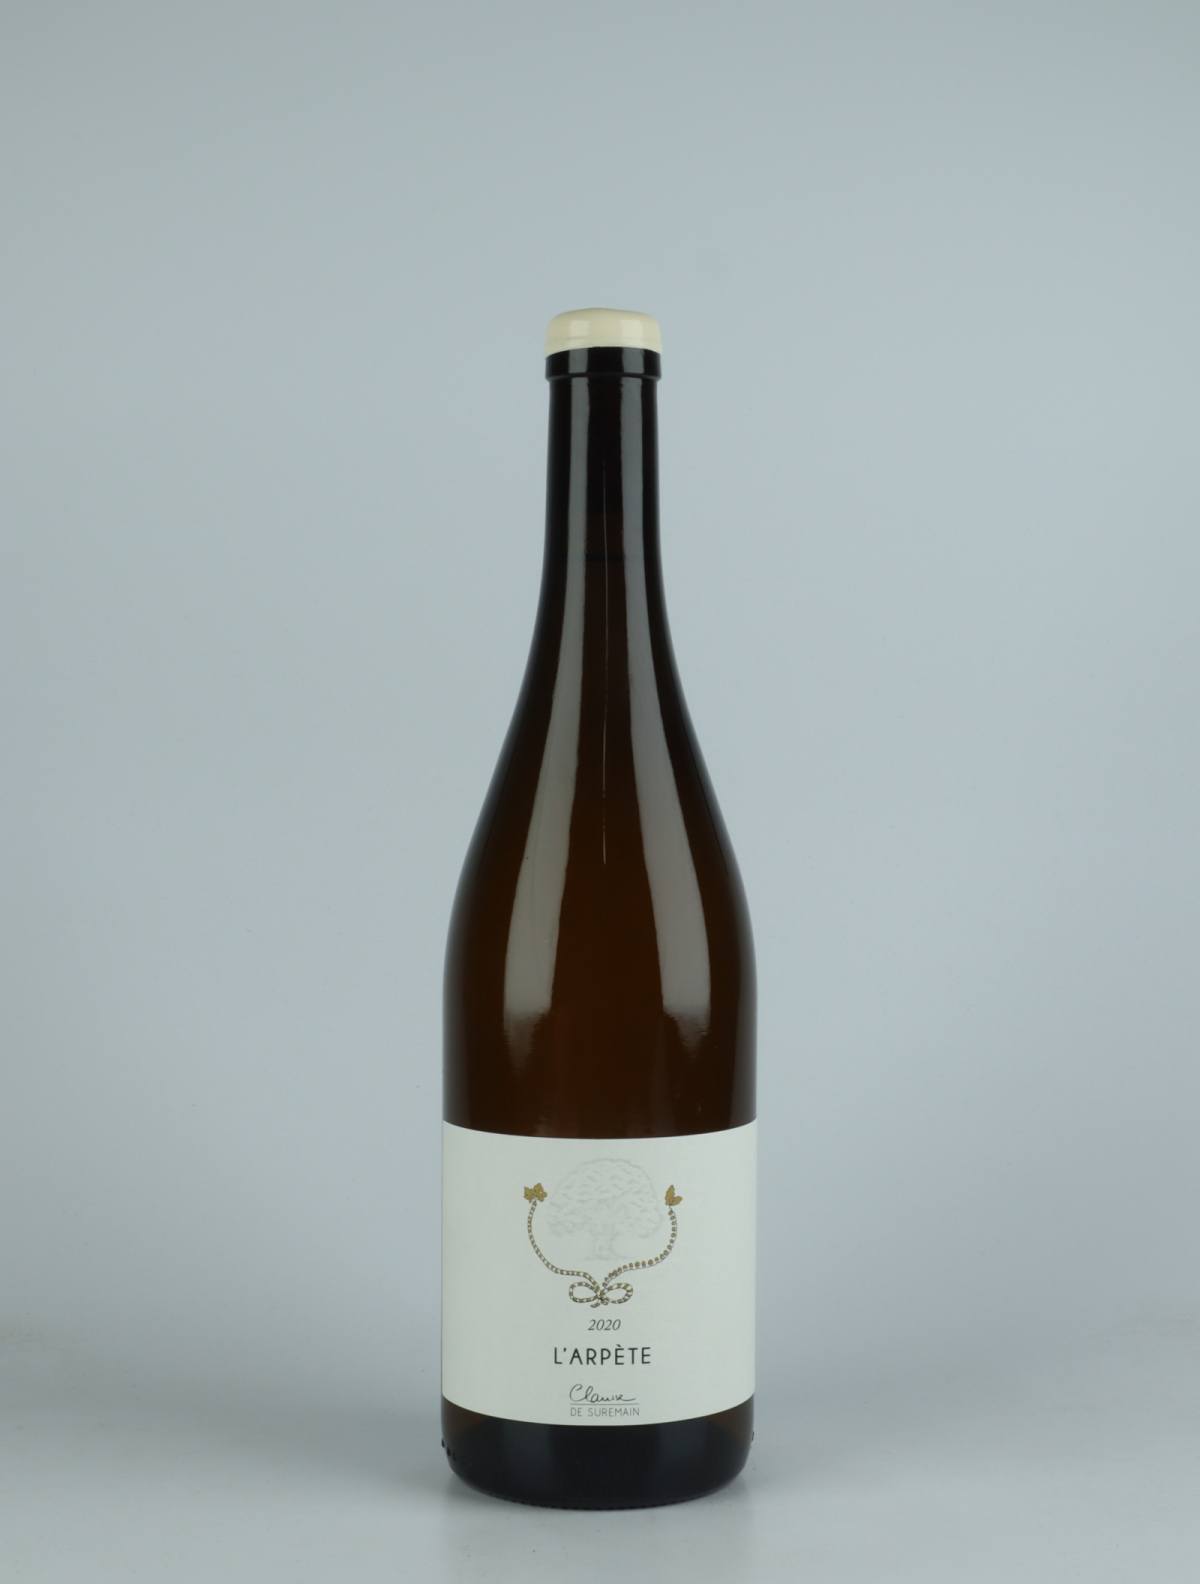 A bottle 2020 L'Arpète White wine from Clarisse de Suremain, Burgundy in France